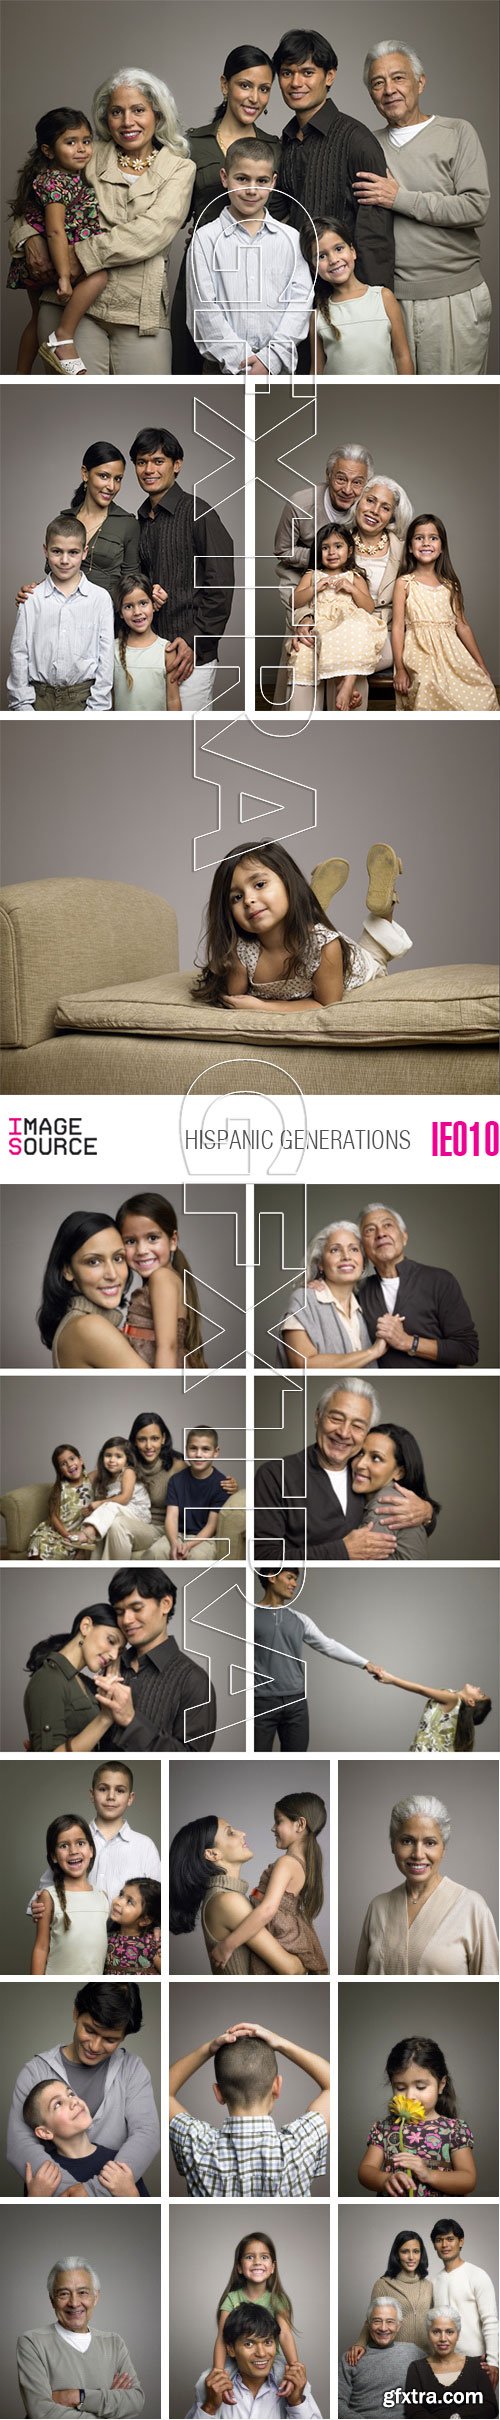 Image Source IE010 Hispanic Generations